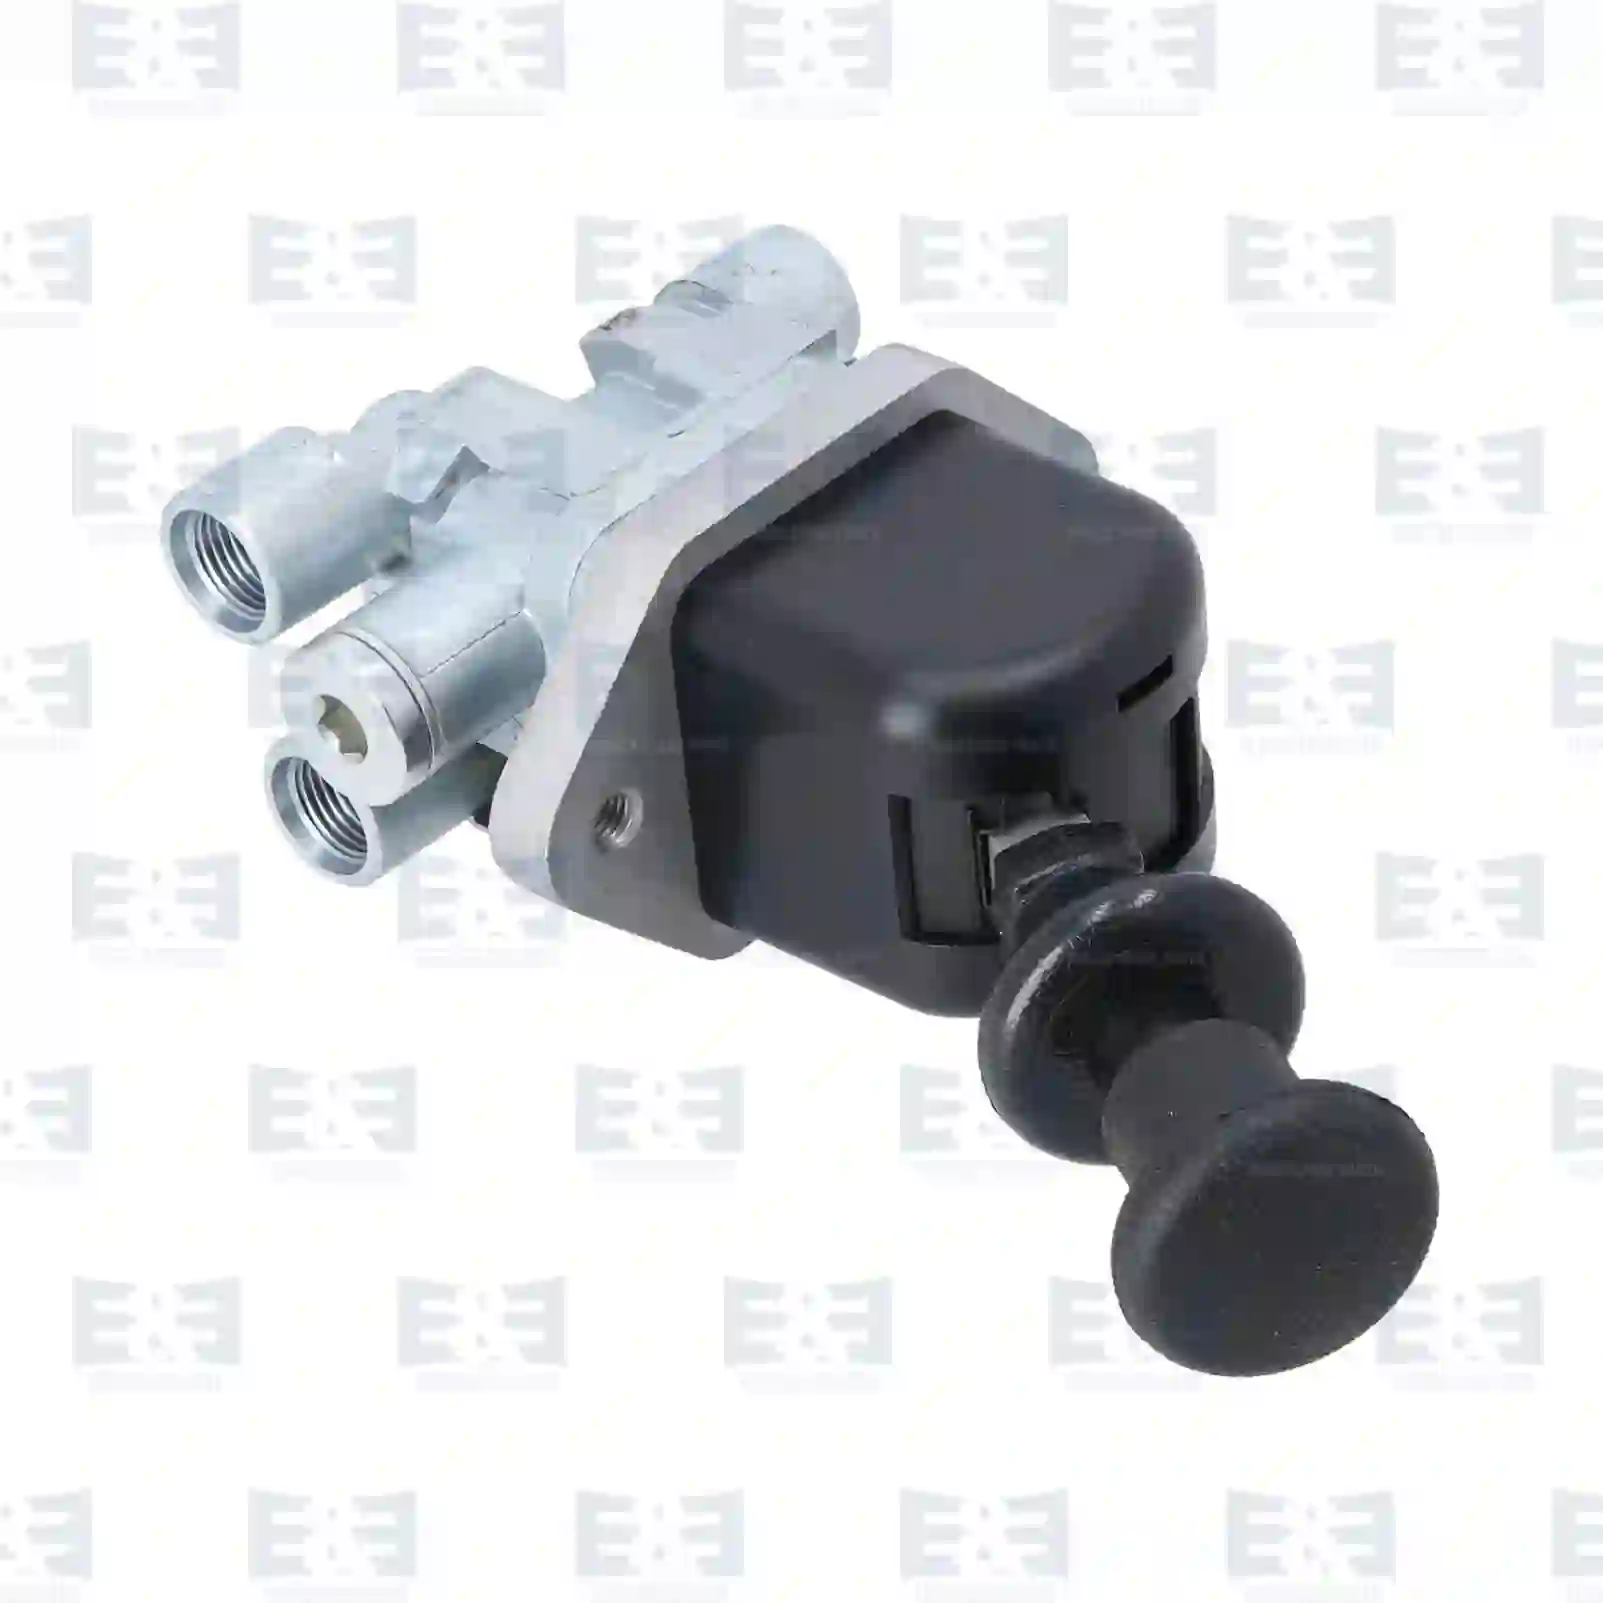  Hand brake valve || E&E Truck Spare Parts | Truck Spare Parts, Auotomotive Spare Parts